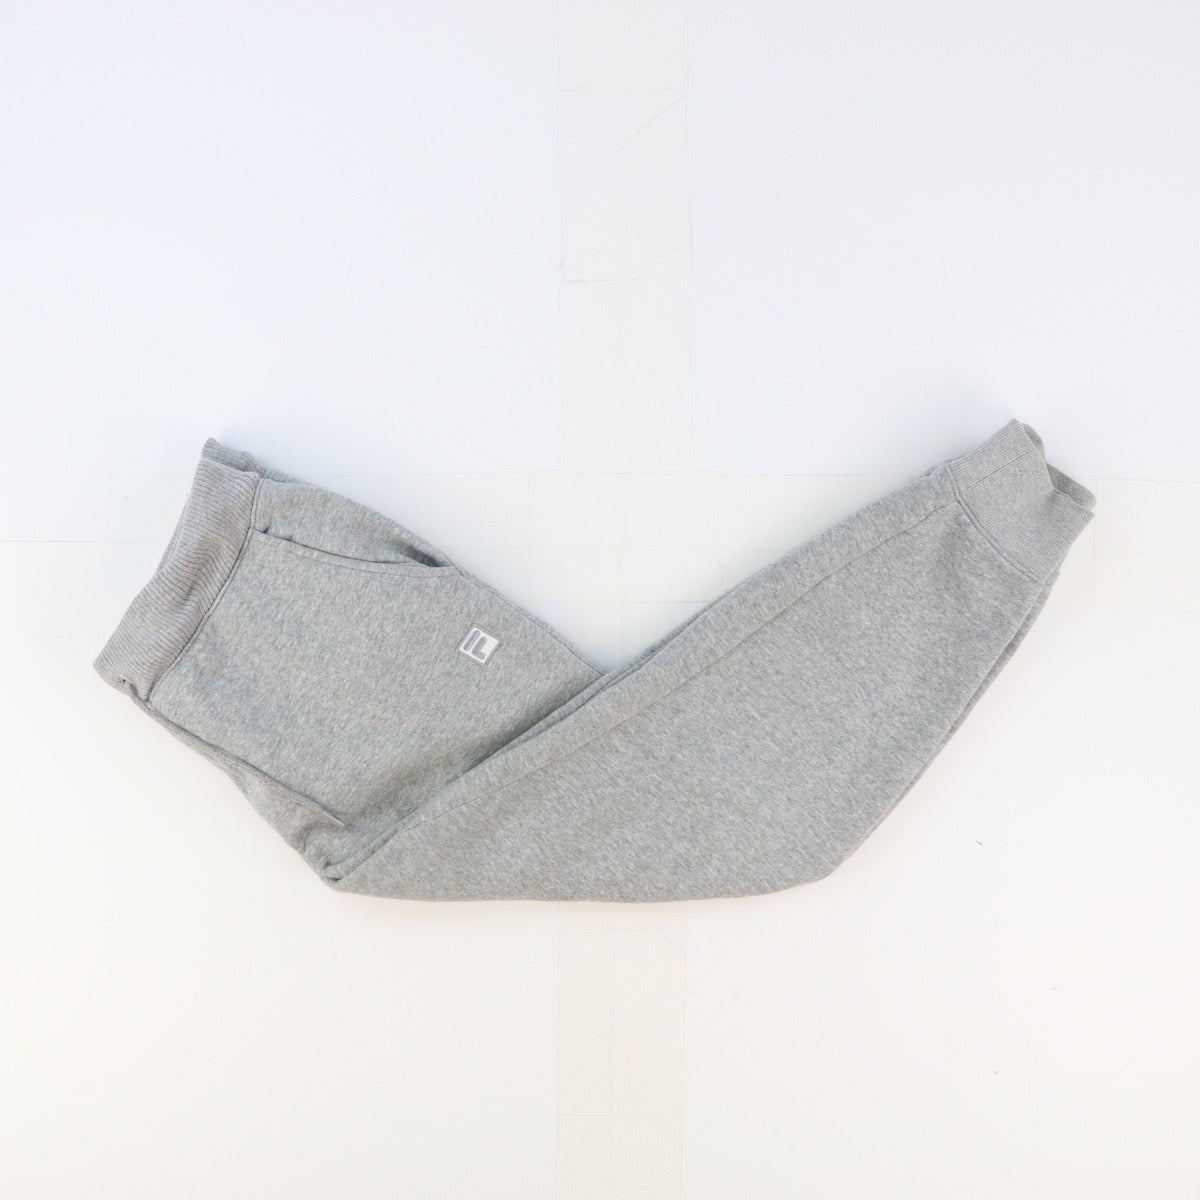 Fila Joggers vintage jogging bottoms cuffed retro vintage grey size medium